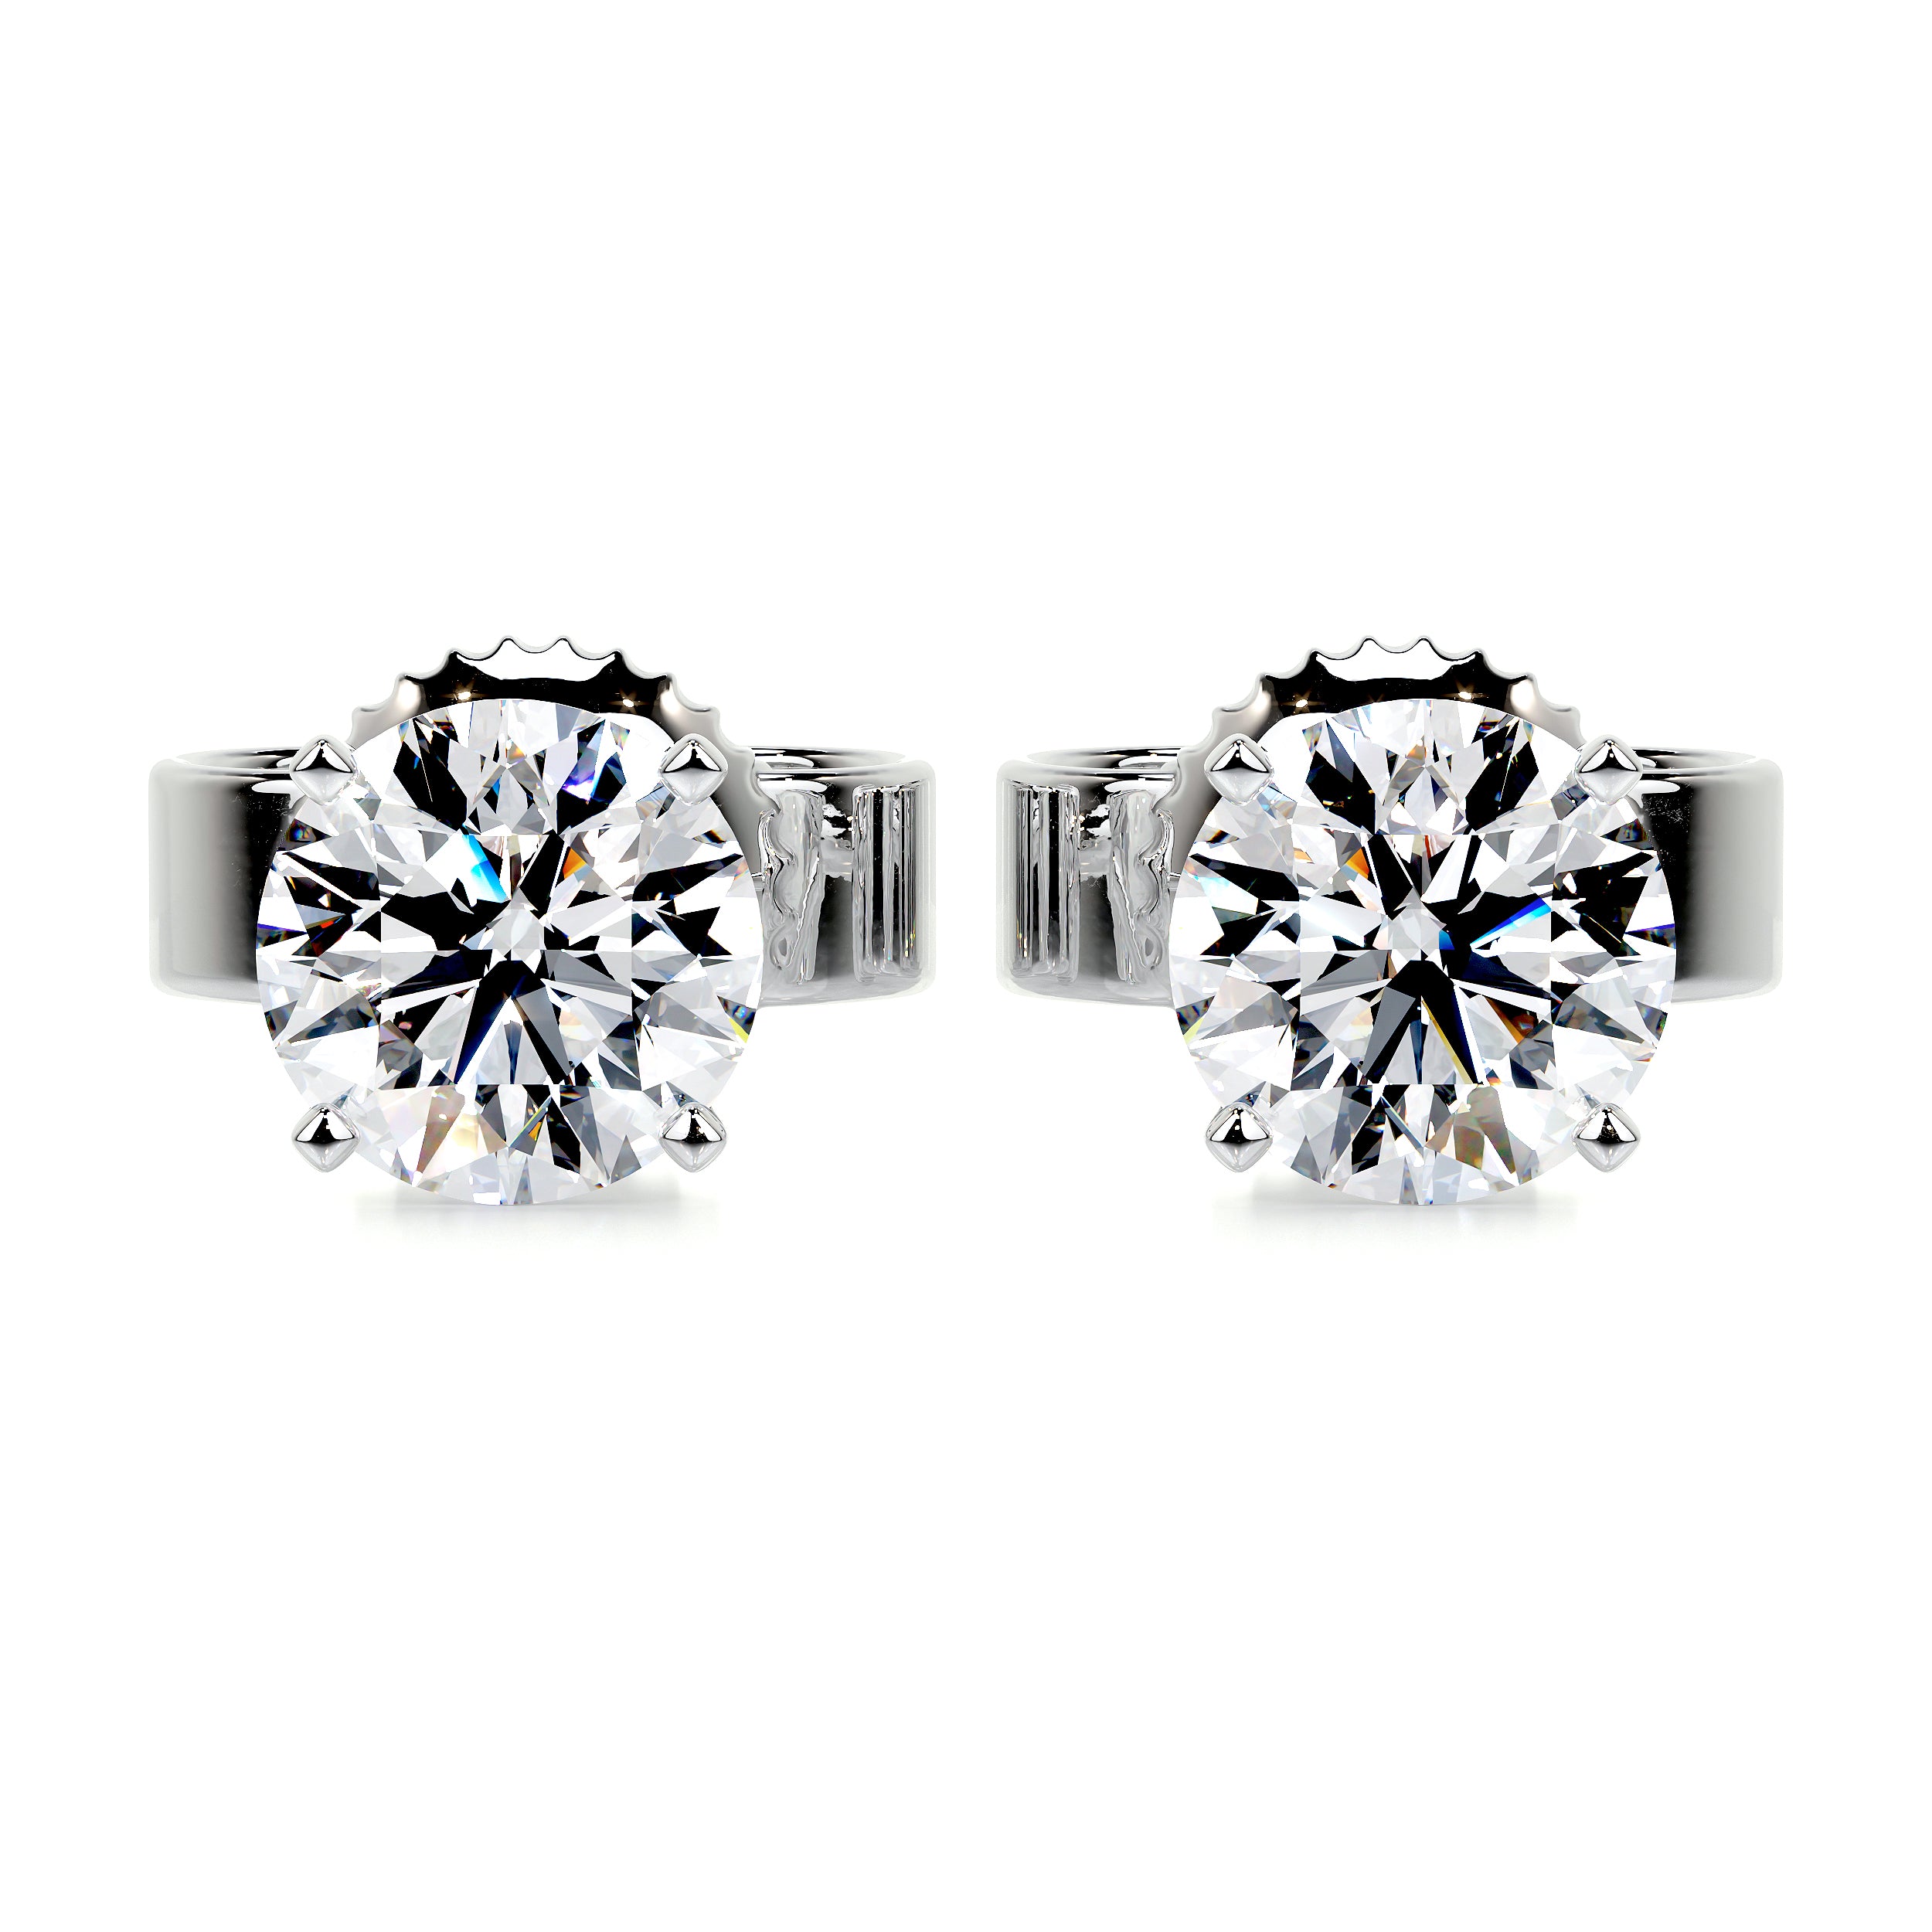 Allen Diamond Earrings   (3 Carat) -14K White Gold